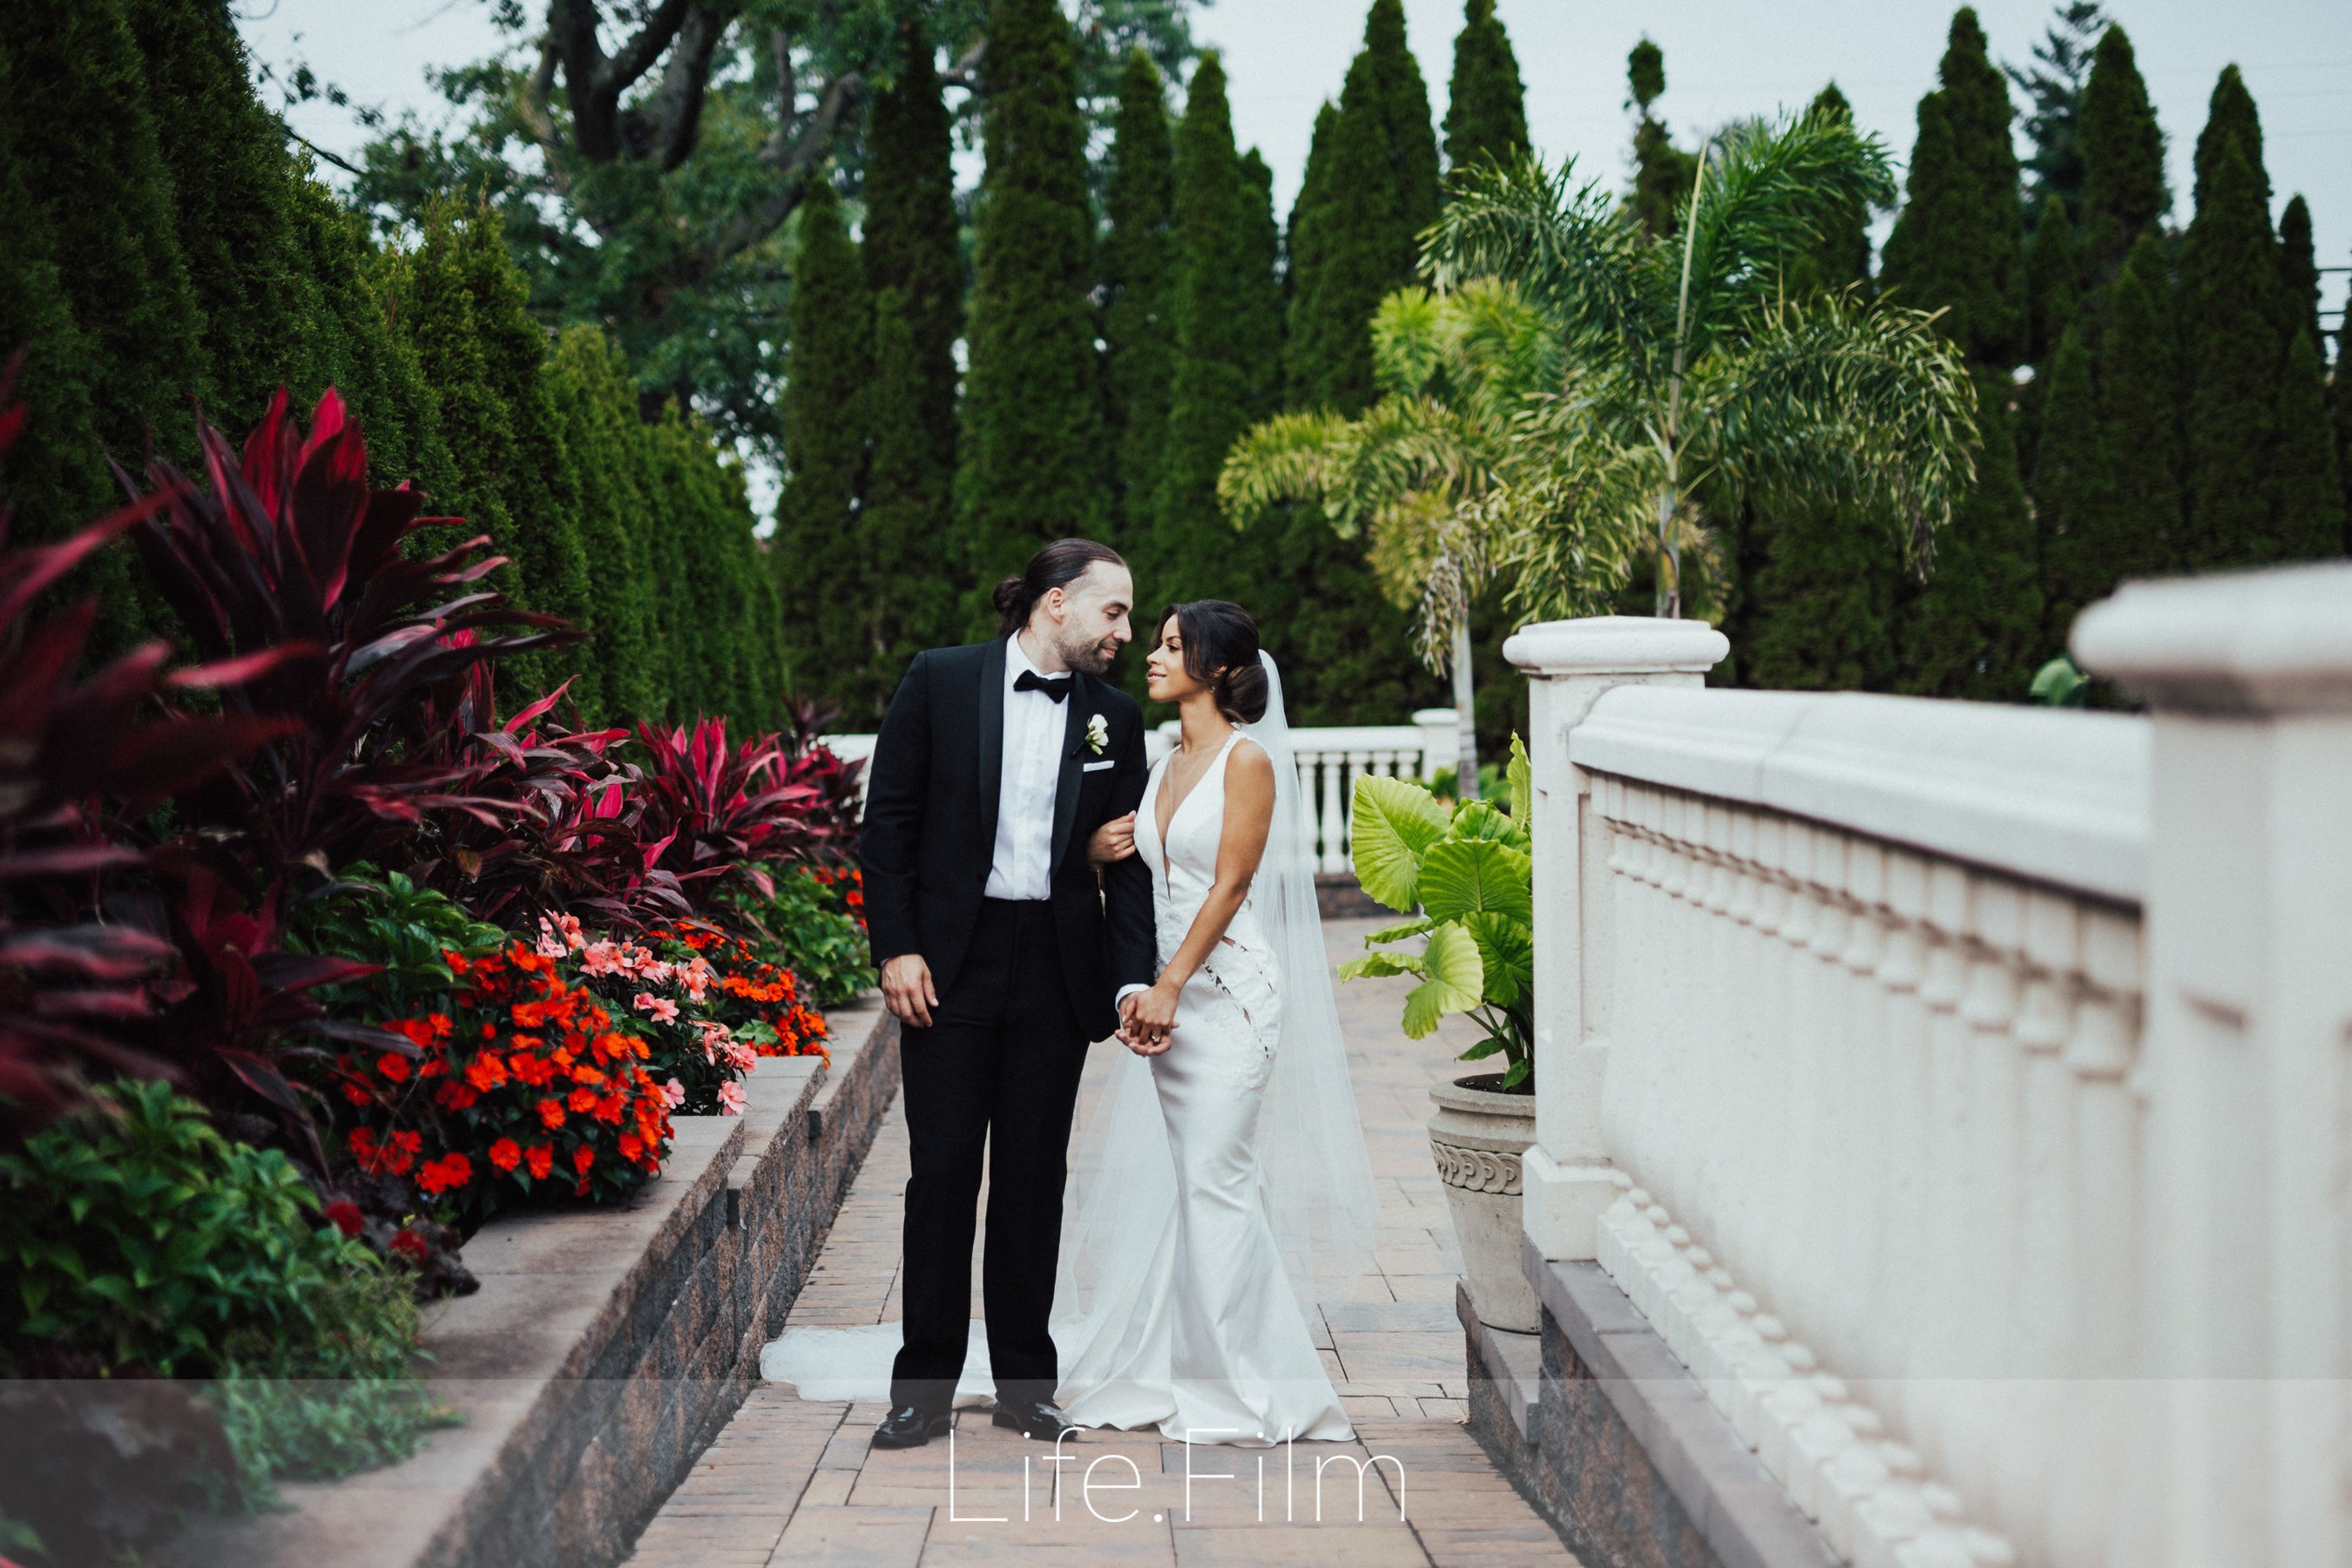 Wedding - Sand Castle | Wedding Photography and Wedding Videography